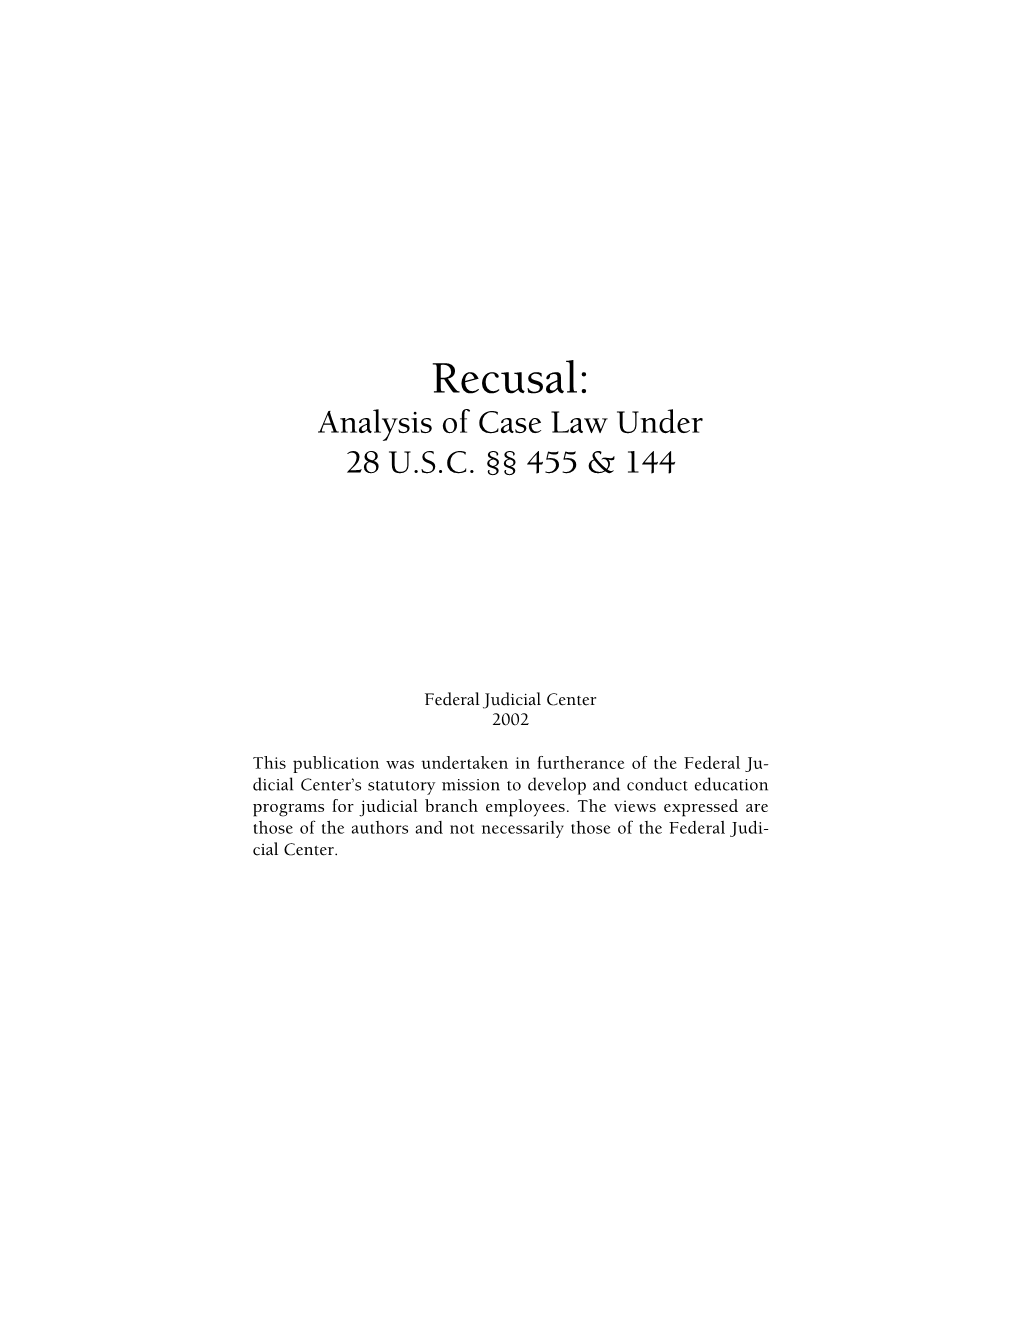 Recusal: Analysis of Case Law Under 28 U.S.C